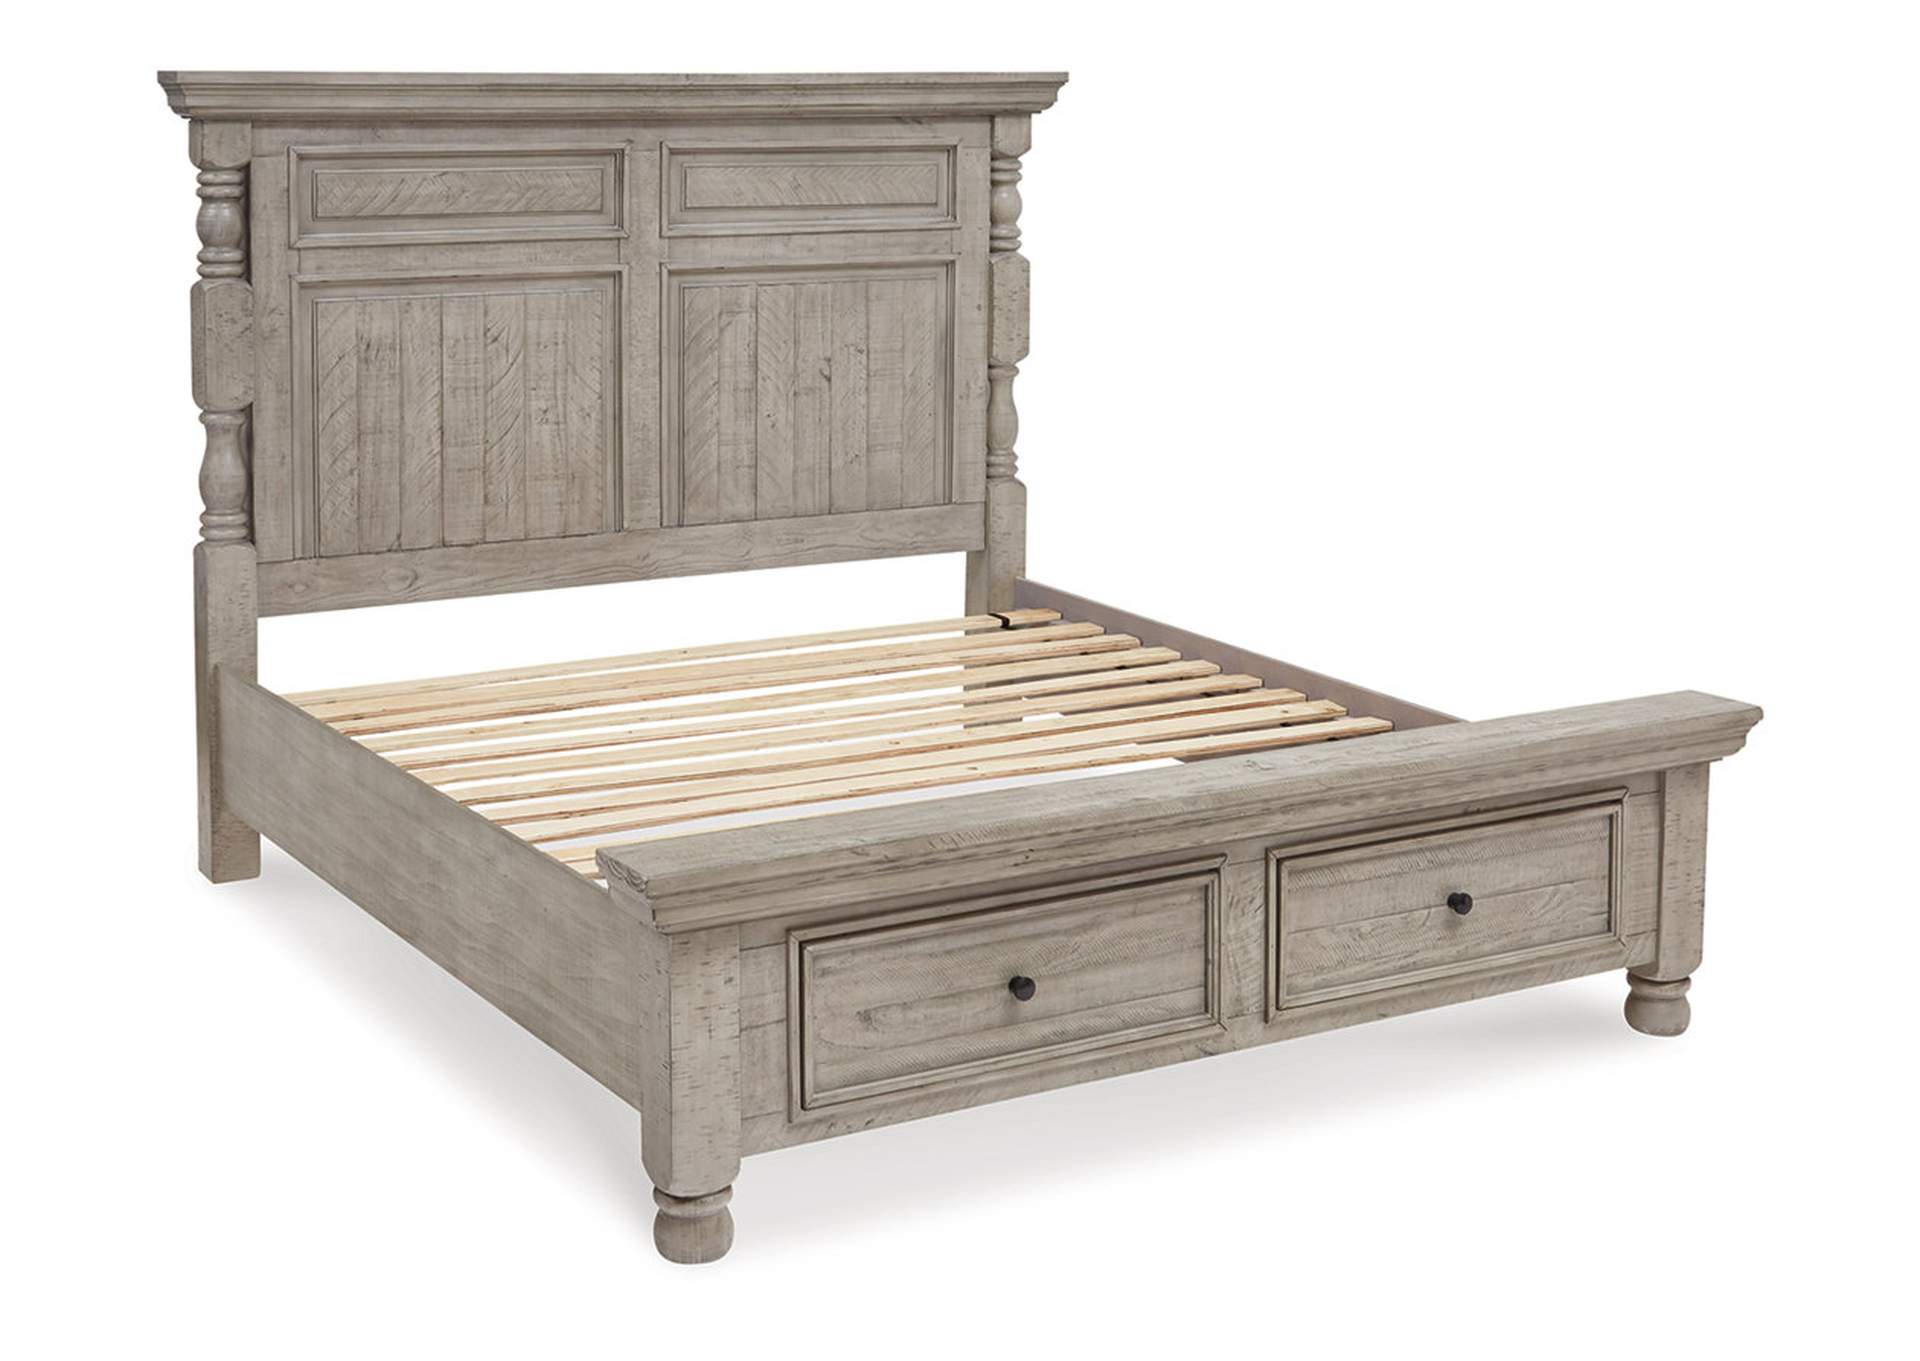 Harrastone Queen Panel Bed with Mirrored Dresser, Chest and 2 Nightstands,Millennium